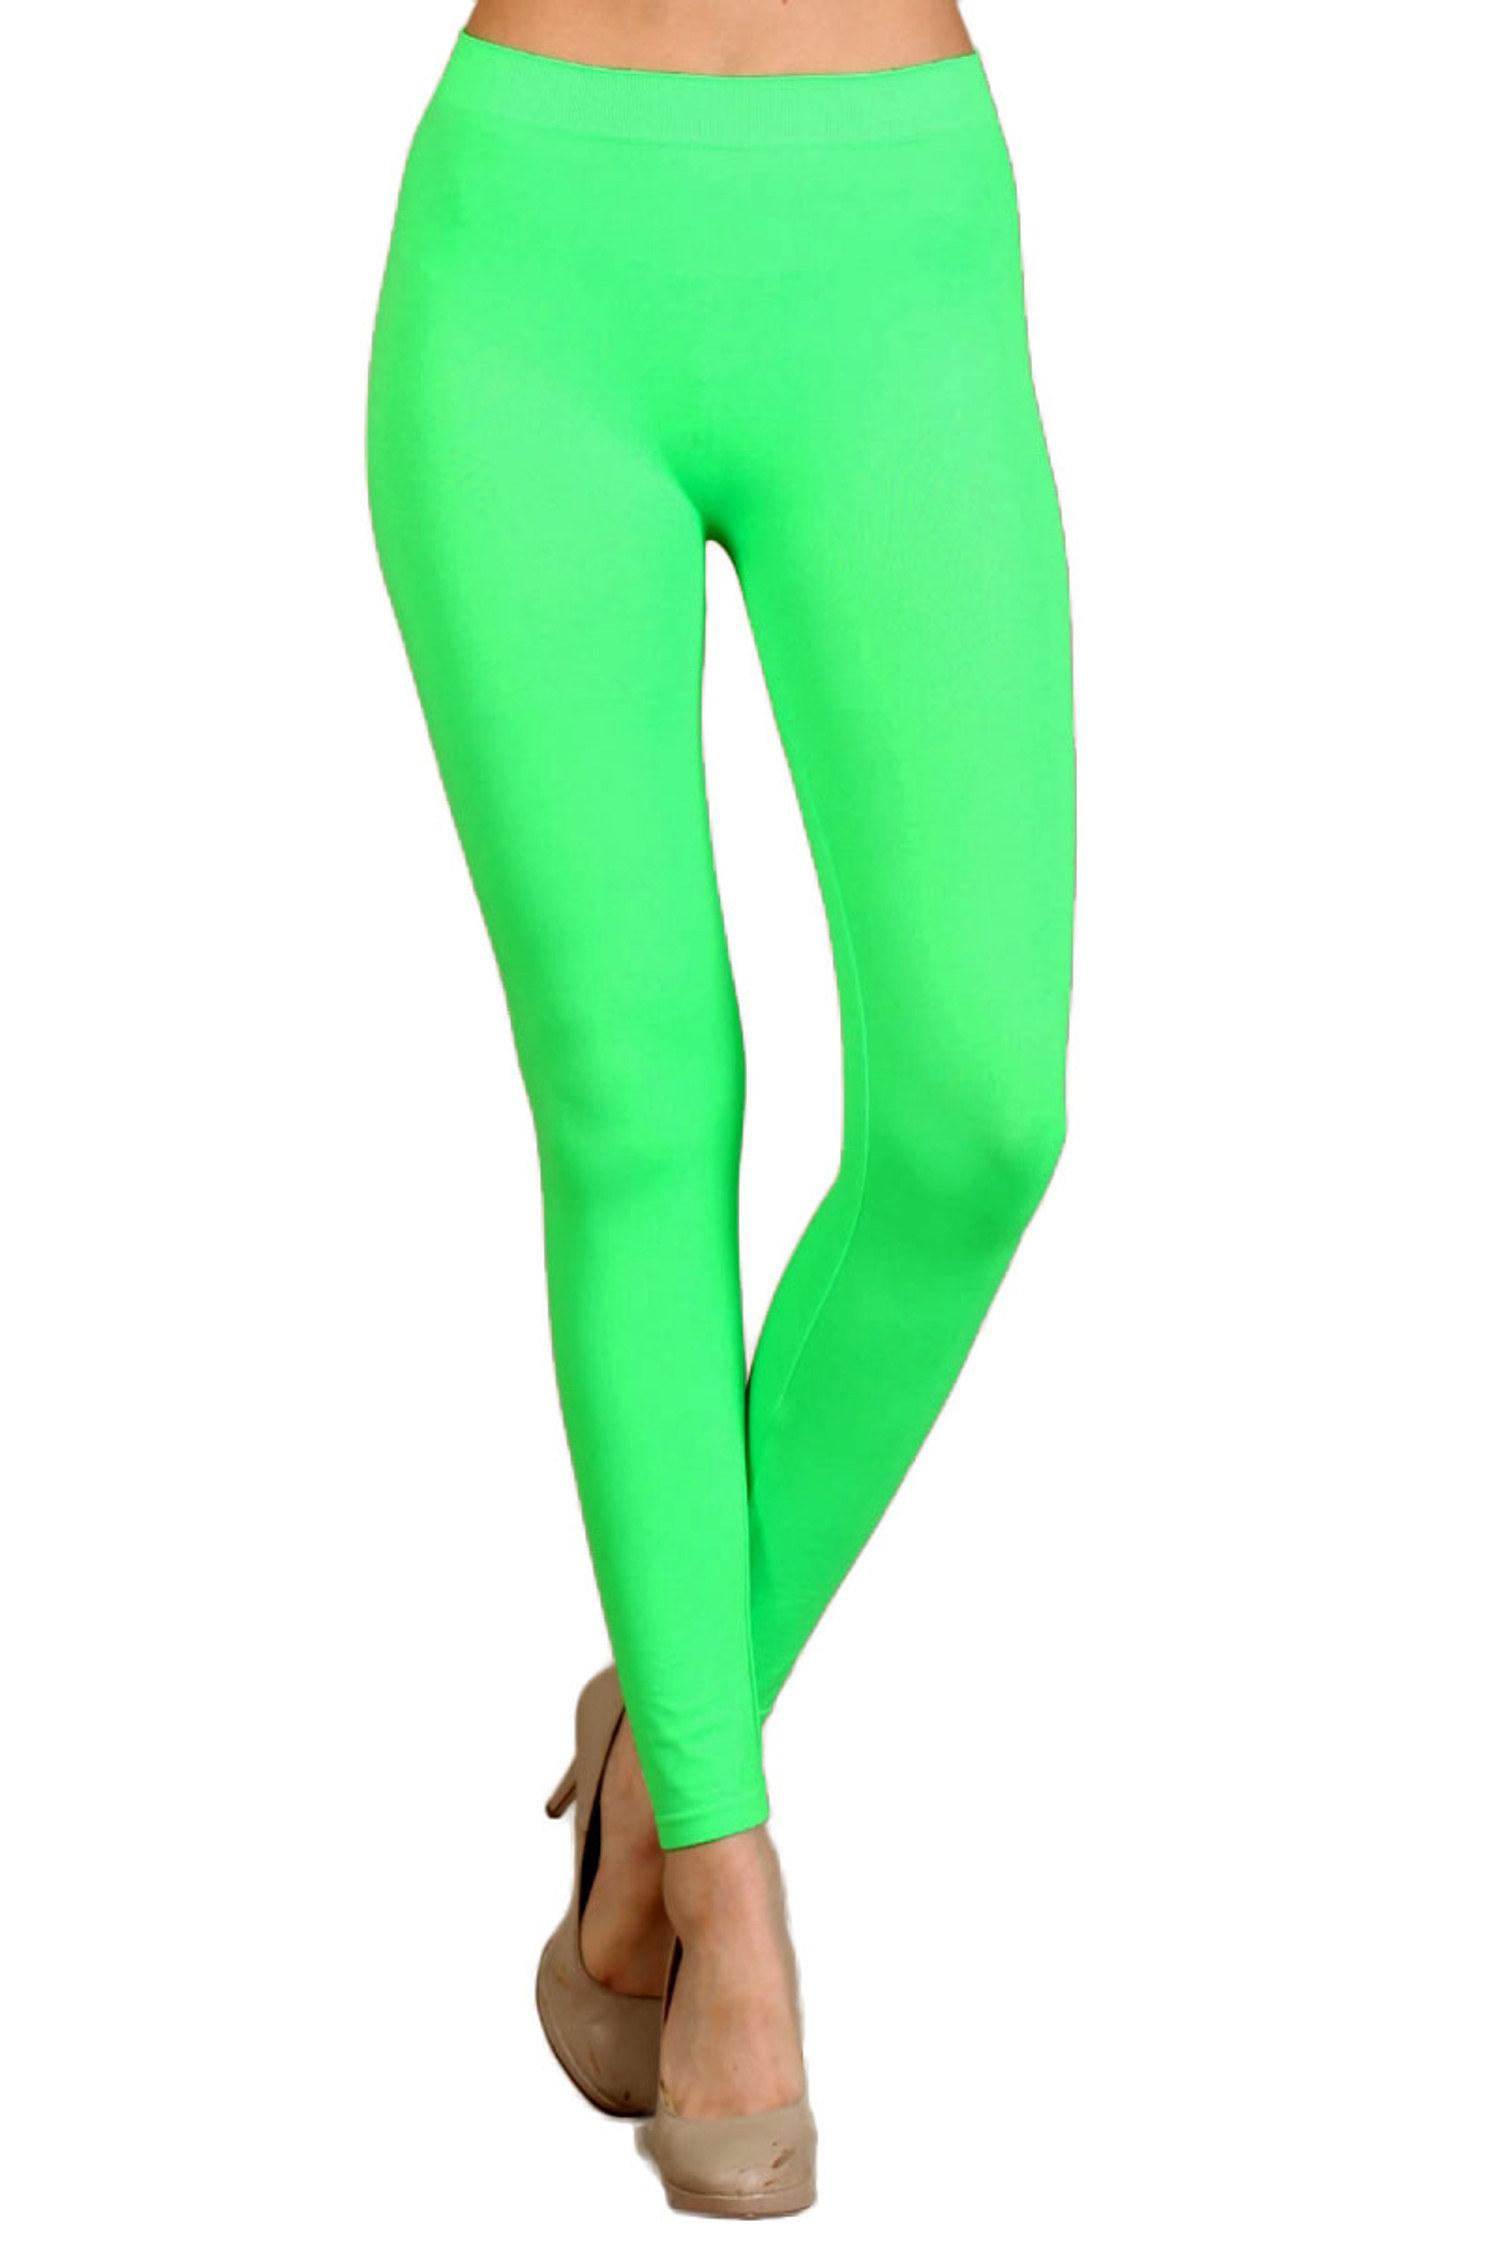 Wholesale Neon Green Bright Women's Leggings Manufacturer in USA, UK, Canada